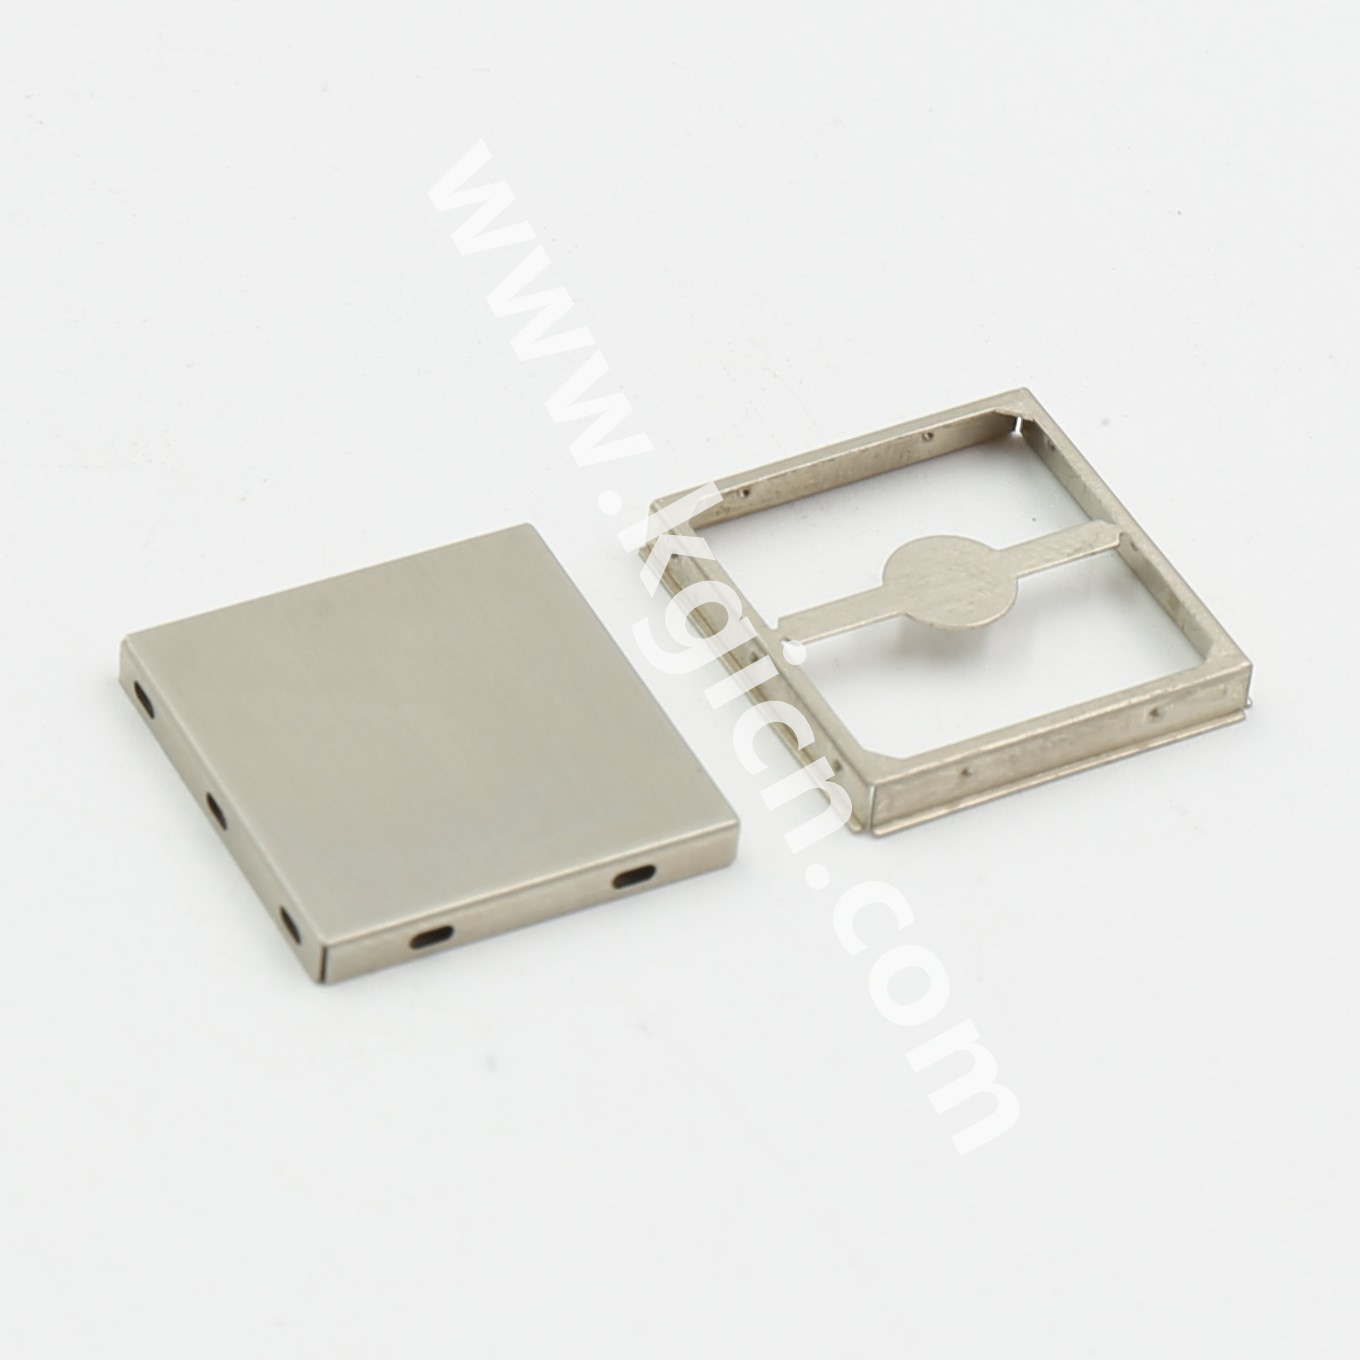 ISO factory metal shield in tape and reel packaging